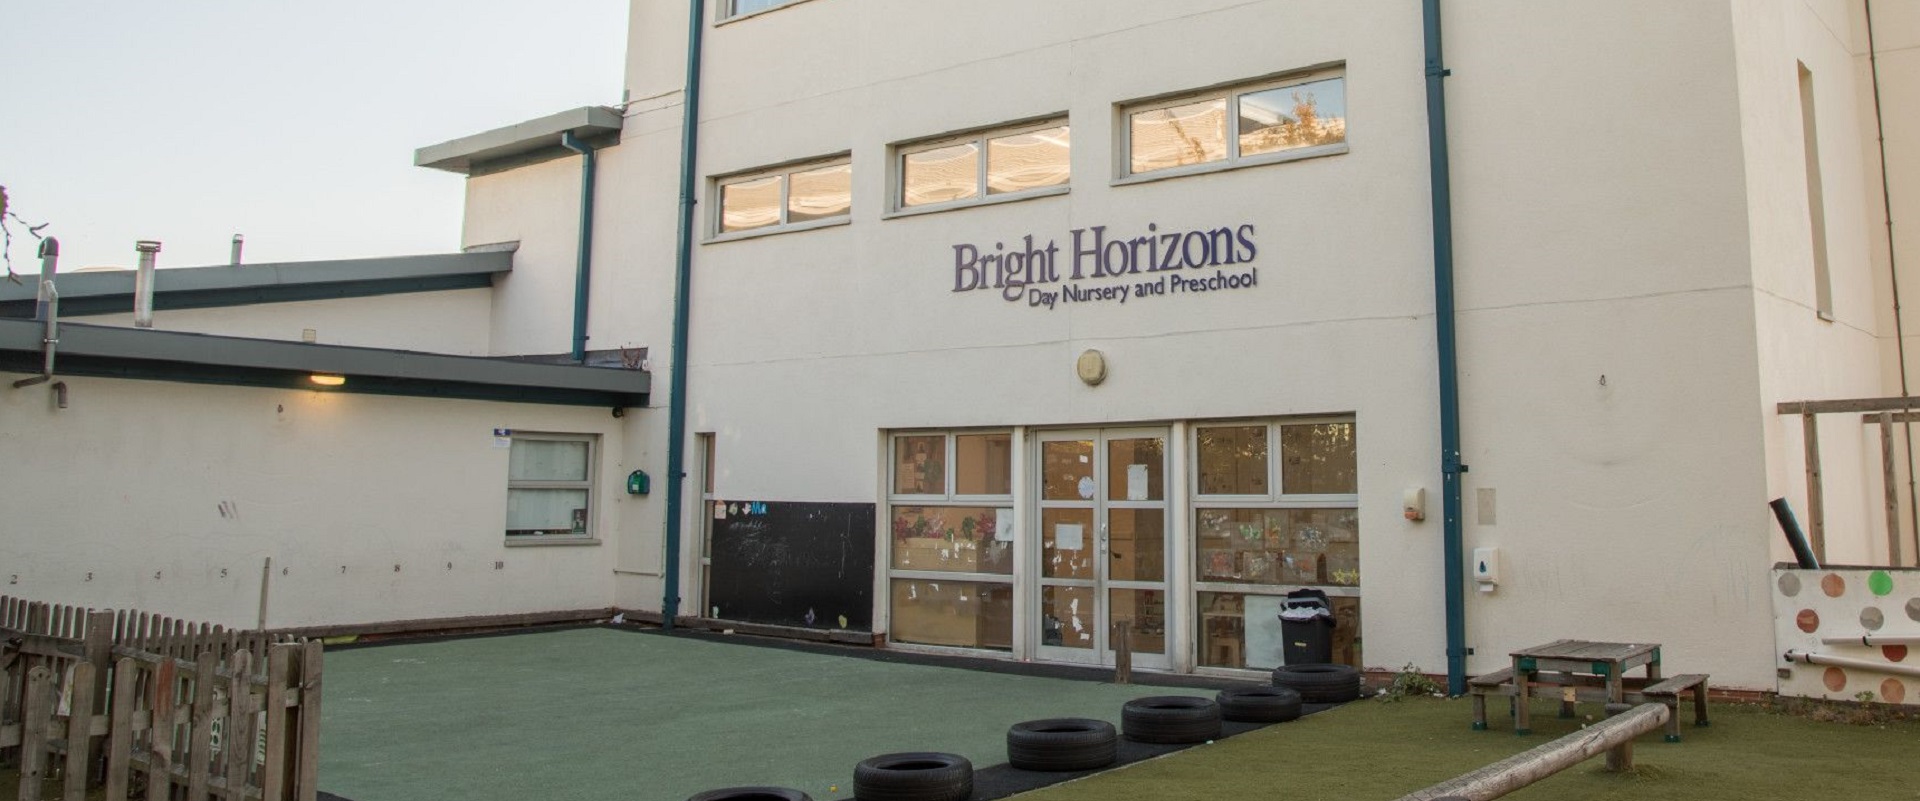 Bright Horizons  Oxford Business Park Day Nursery and Preschool